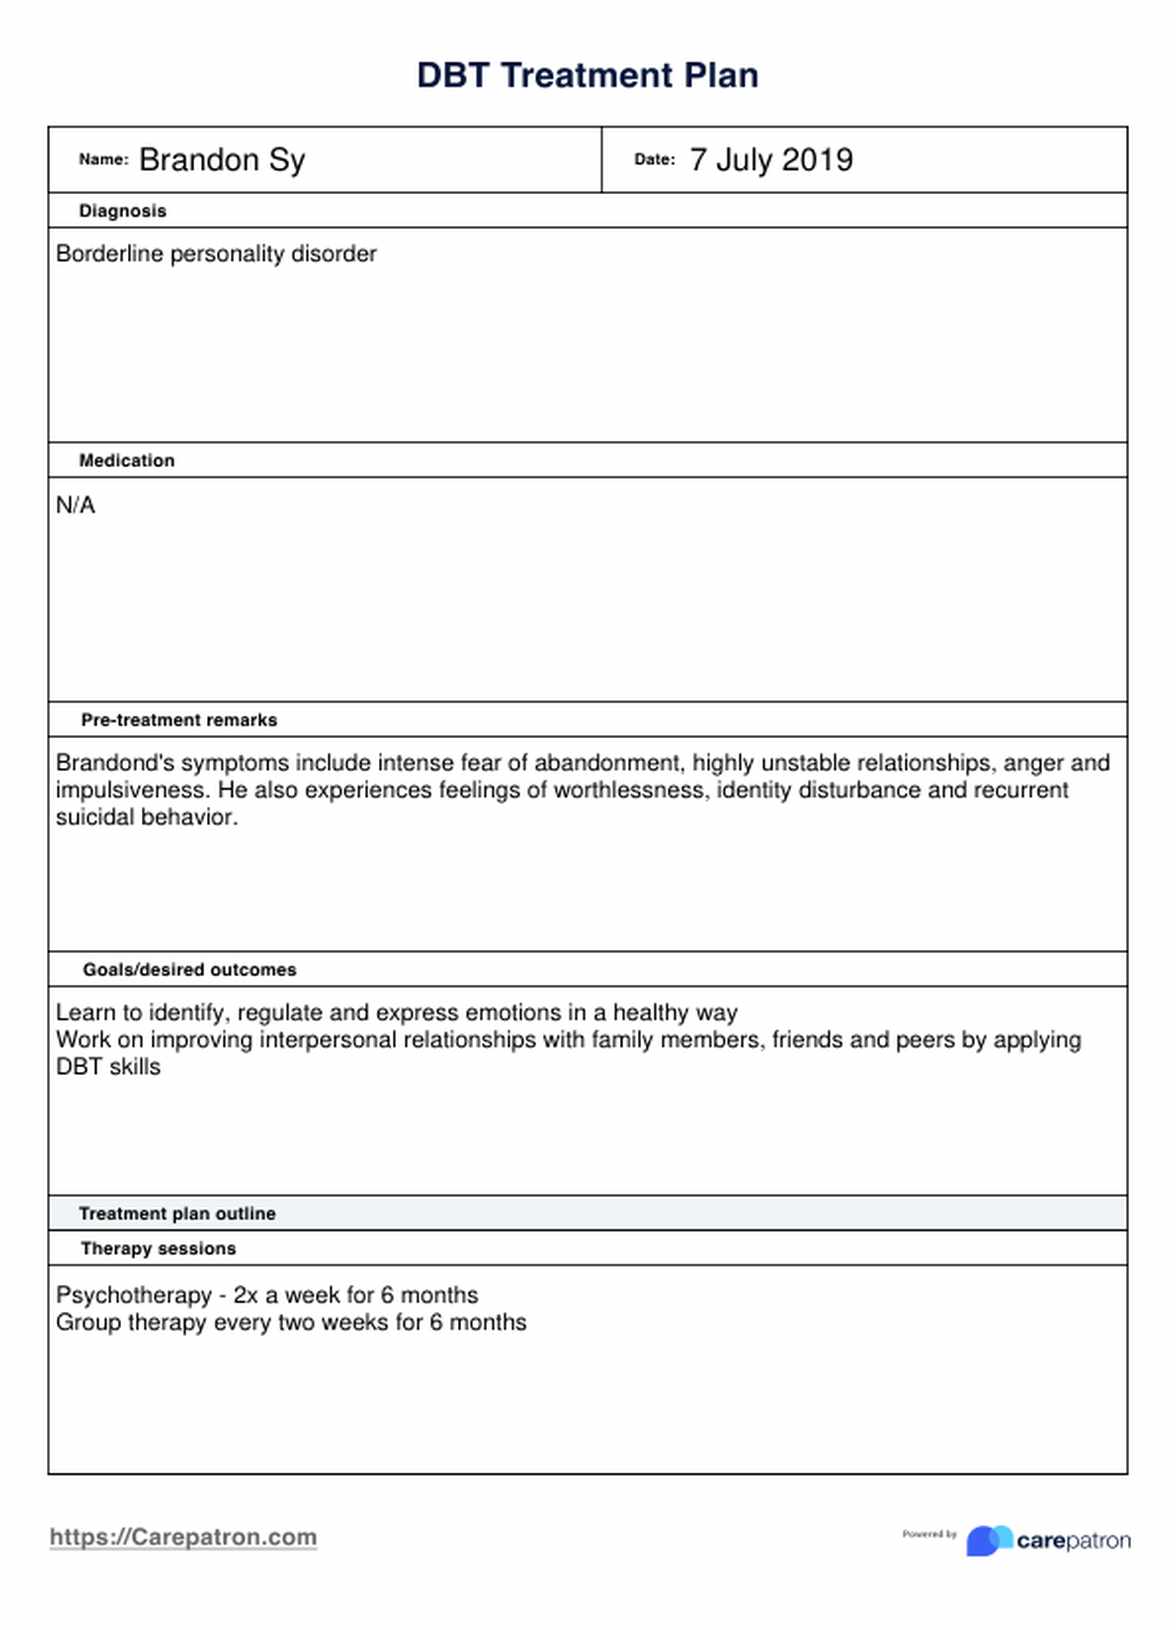 DBT Treatment Plan PDF Example